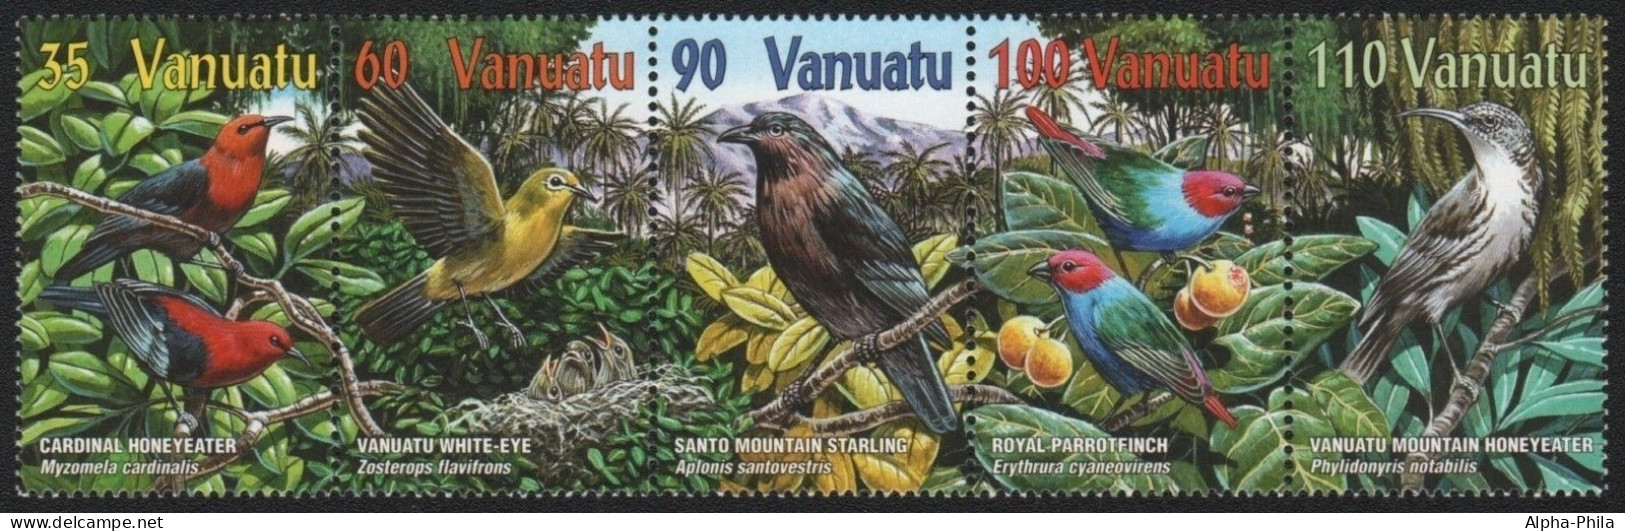 Vanuatu 2001 - Mi-Nr. 1129-1133 ** - MNH - Vögel / Birds - Vanuatu (1980-...)